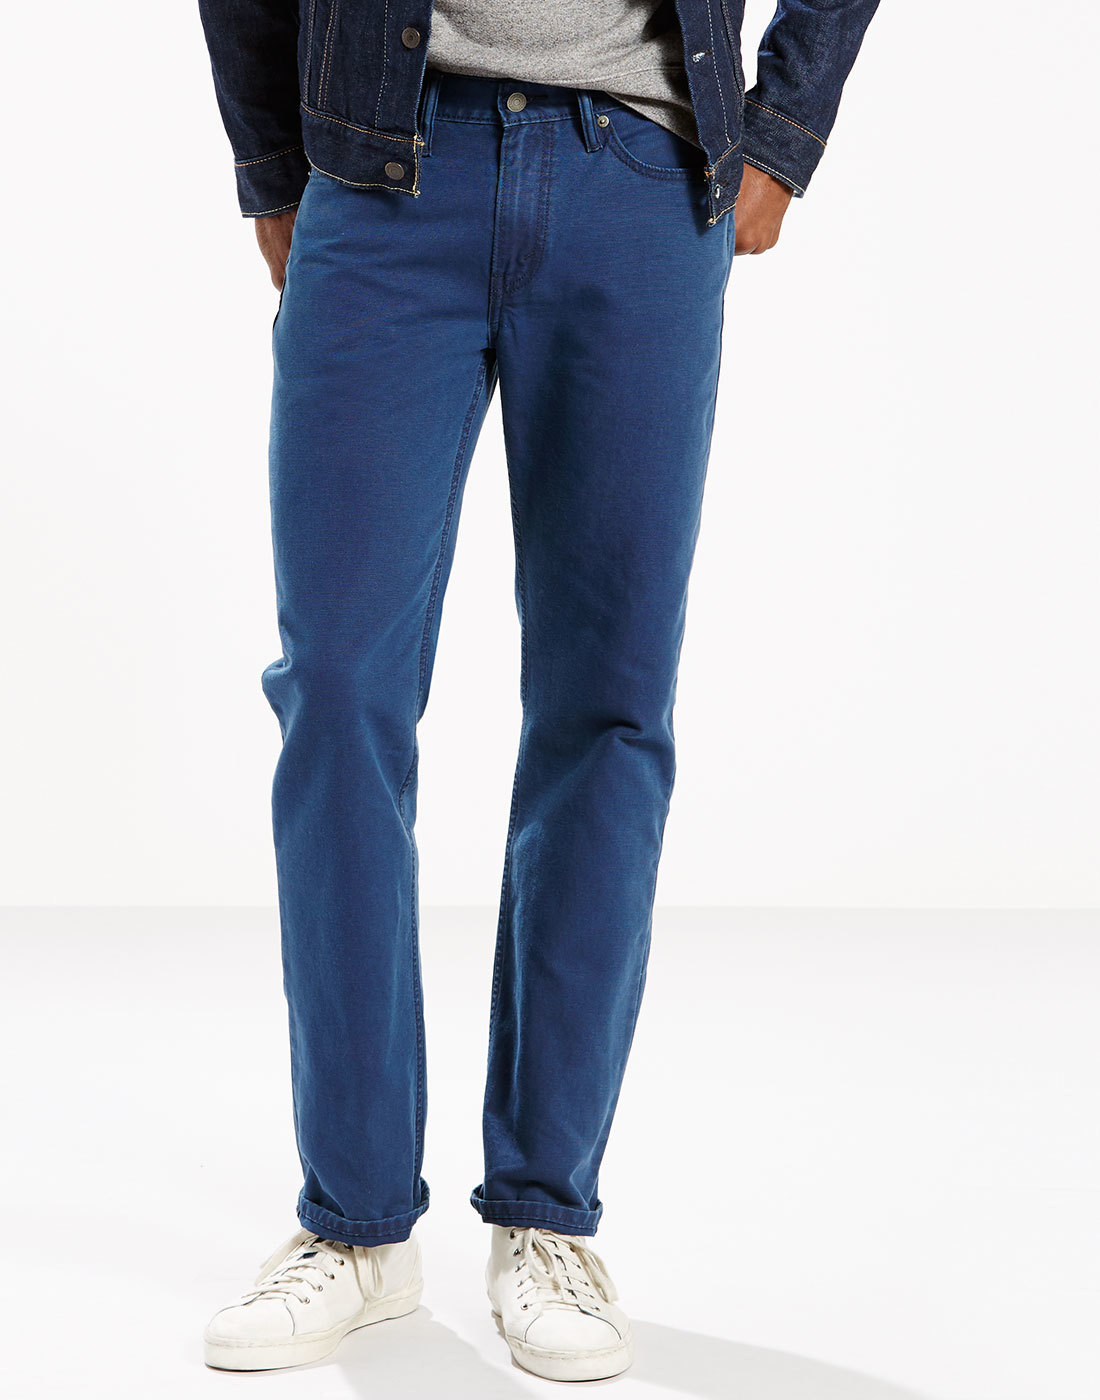 LEVI'S® 514 Retro Mod Regular Straight Canvas Jeans Dress Blues